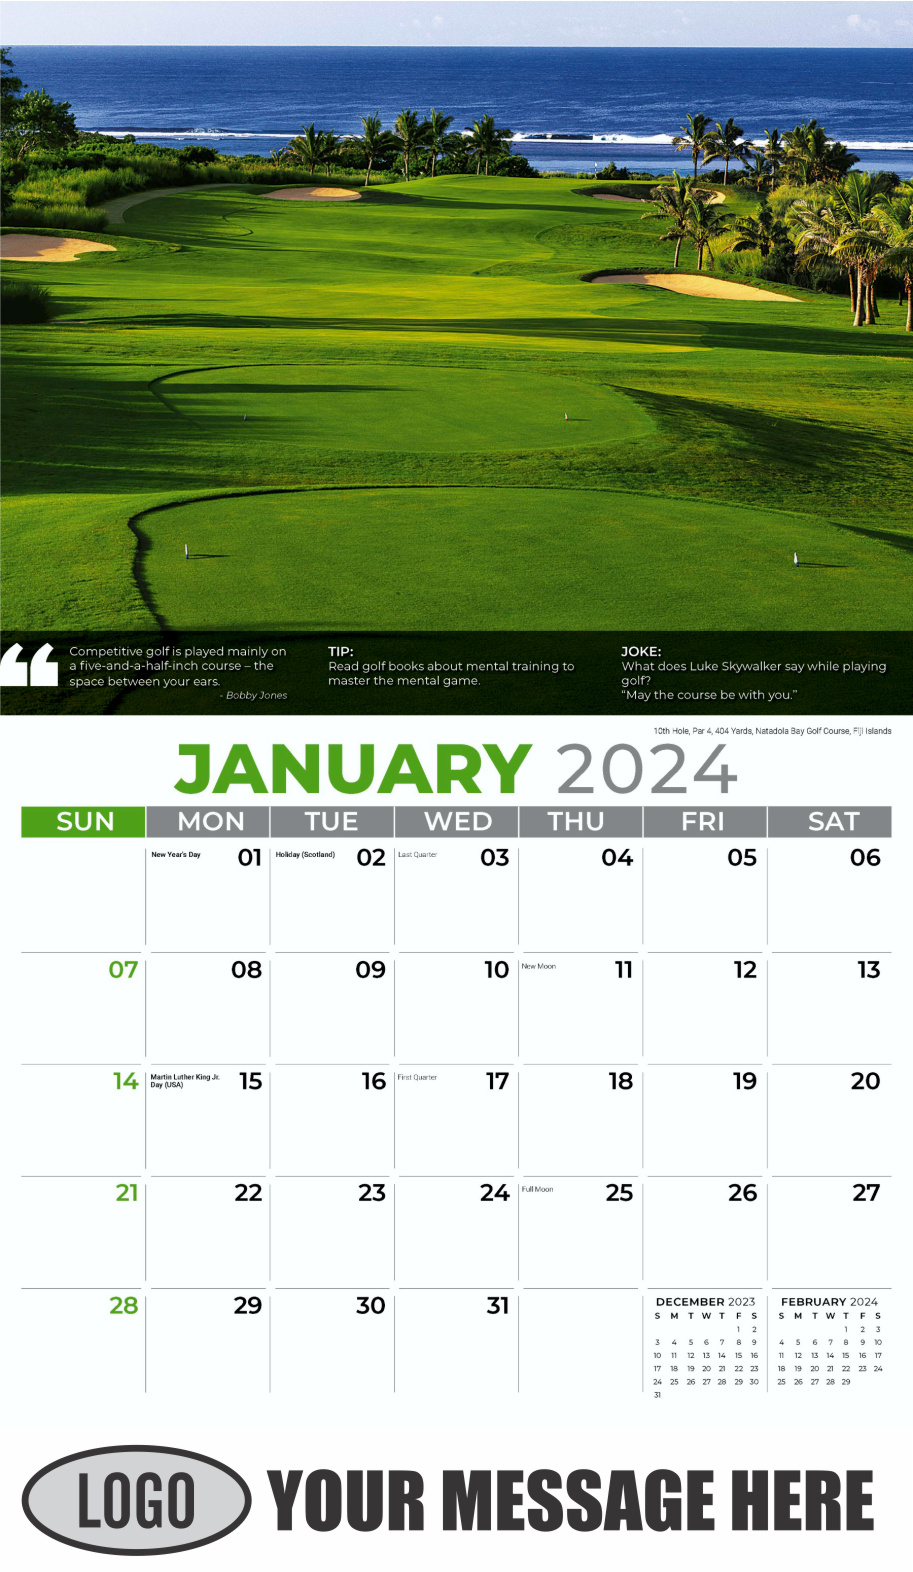 Golf Tips 2024 Business Promo Calendar - January